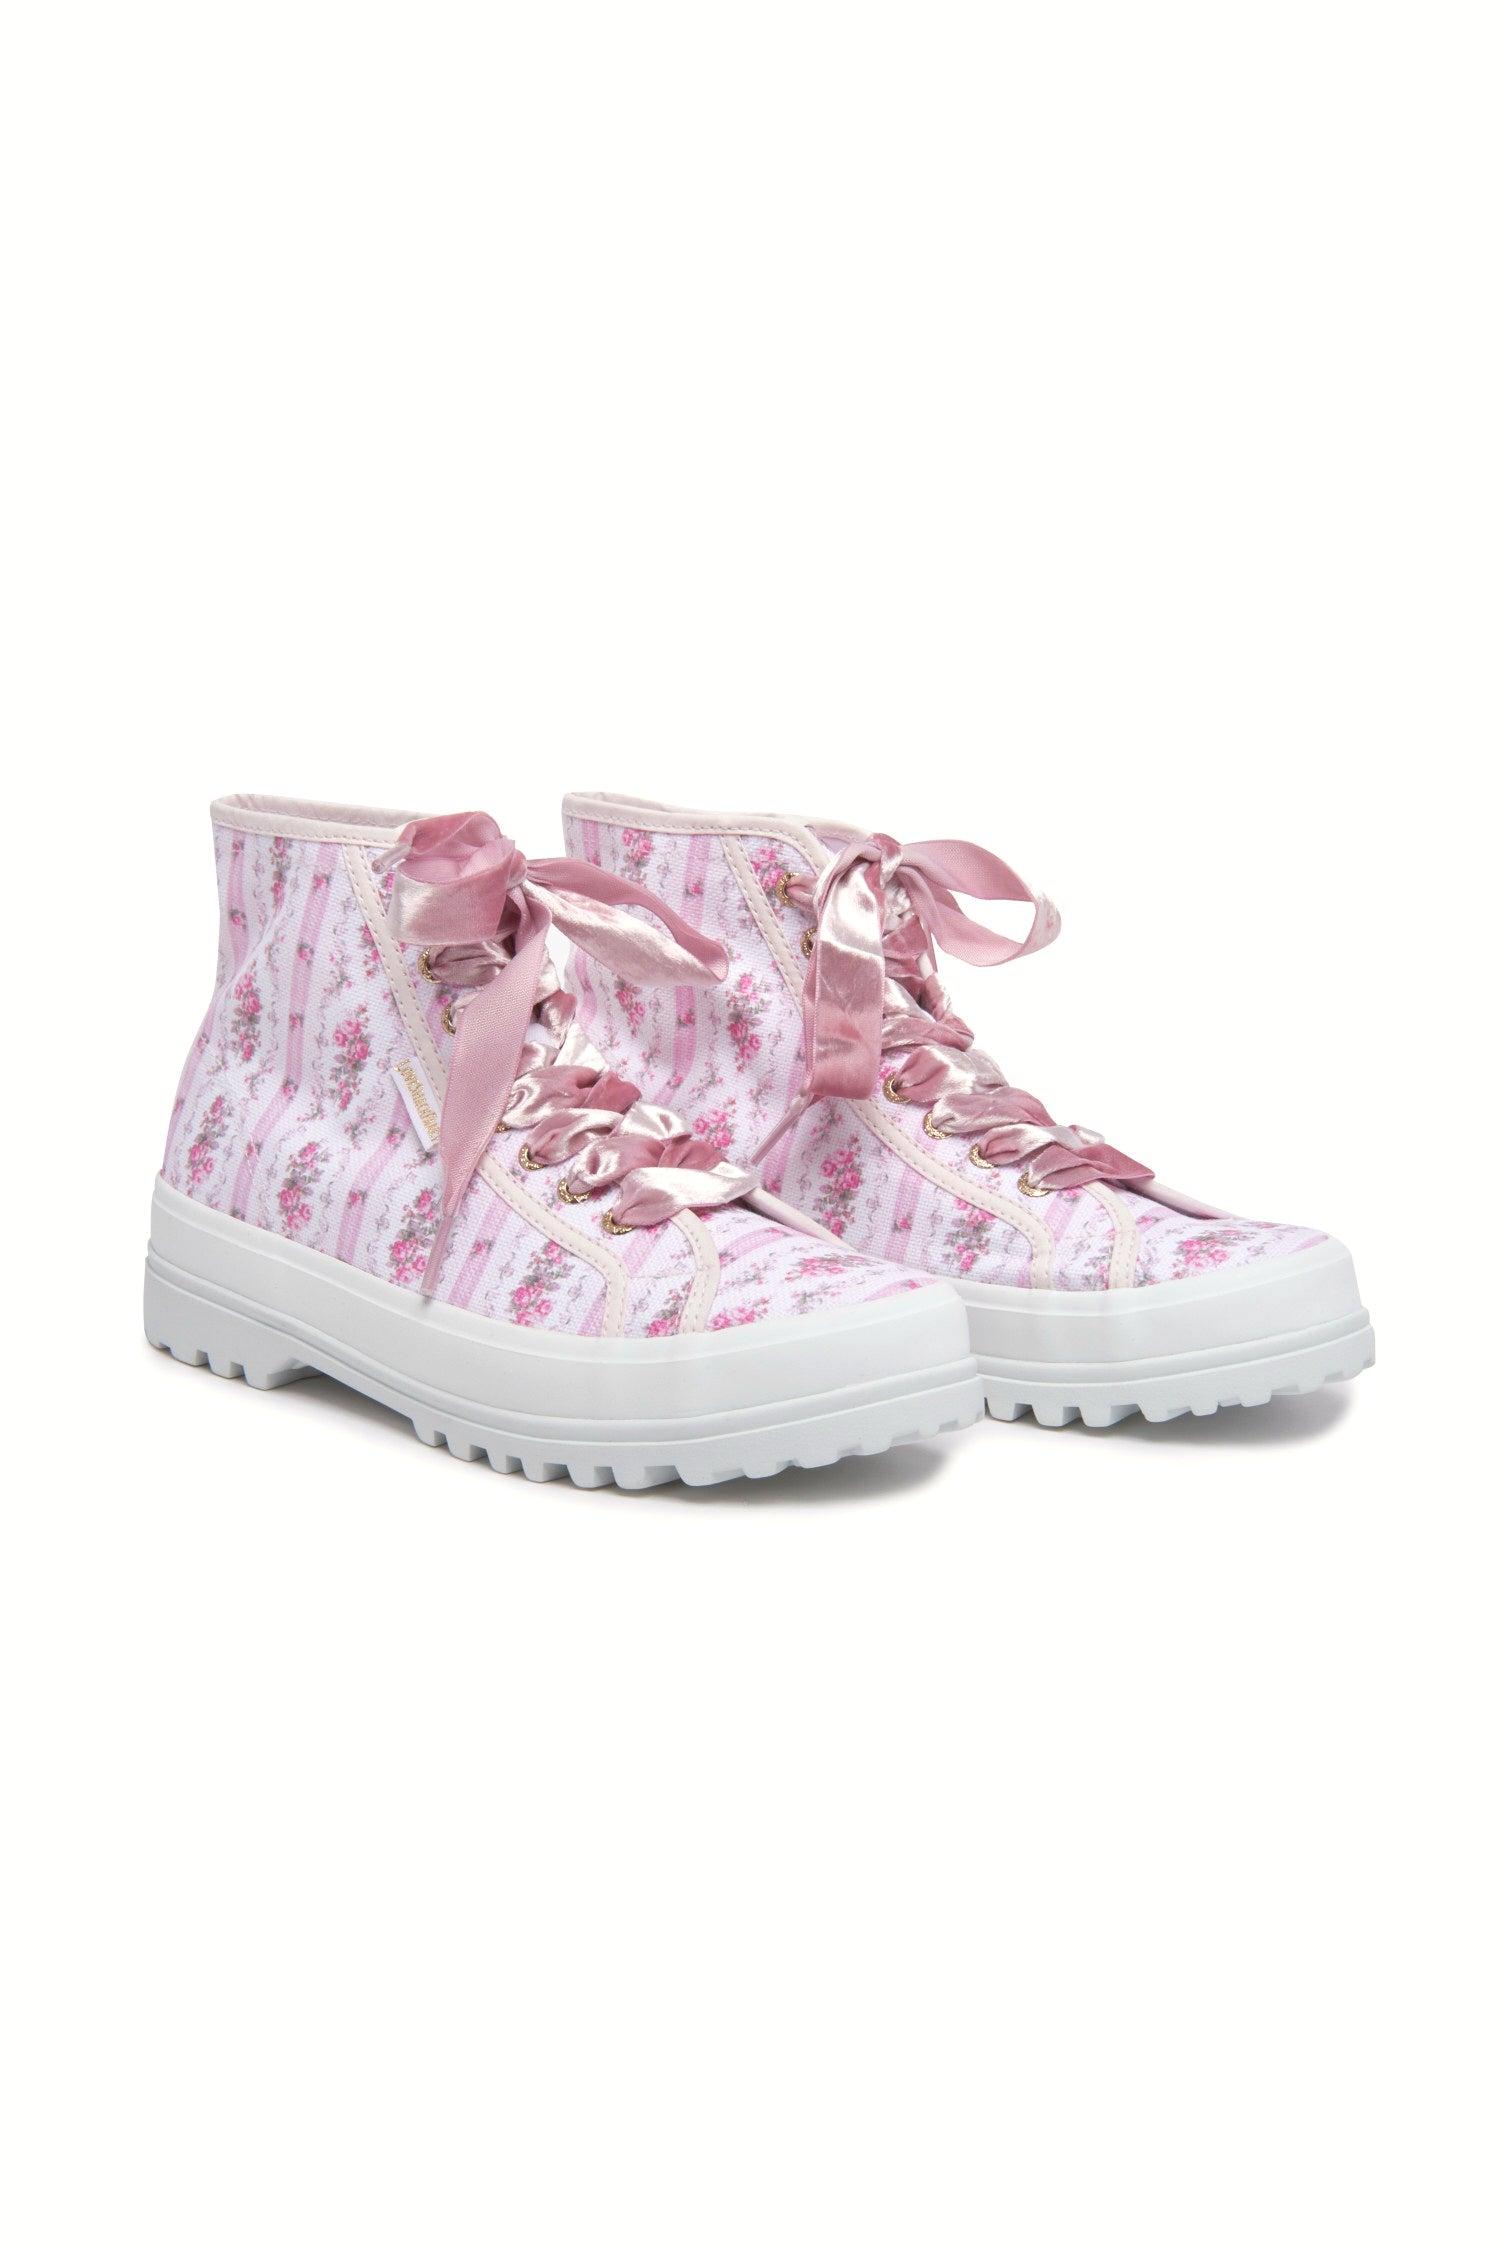 LoveShackFancy X Superga Hightop Lug Sole Sneaker in Pink | Lyst